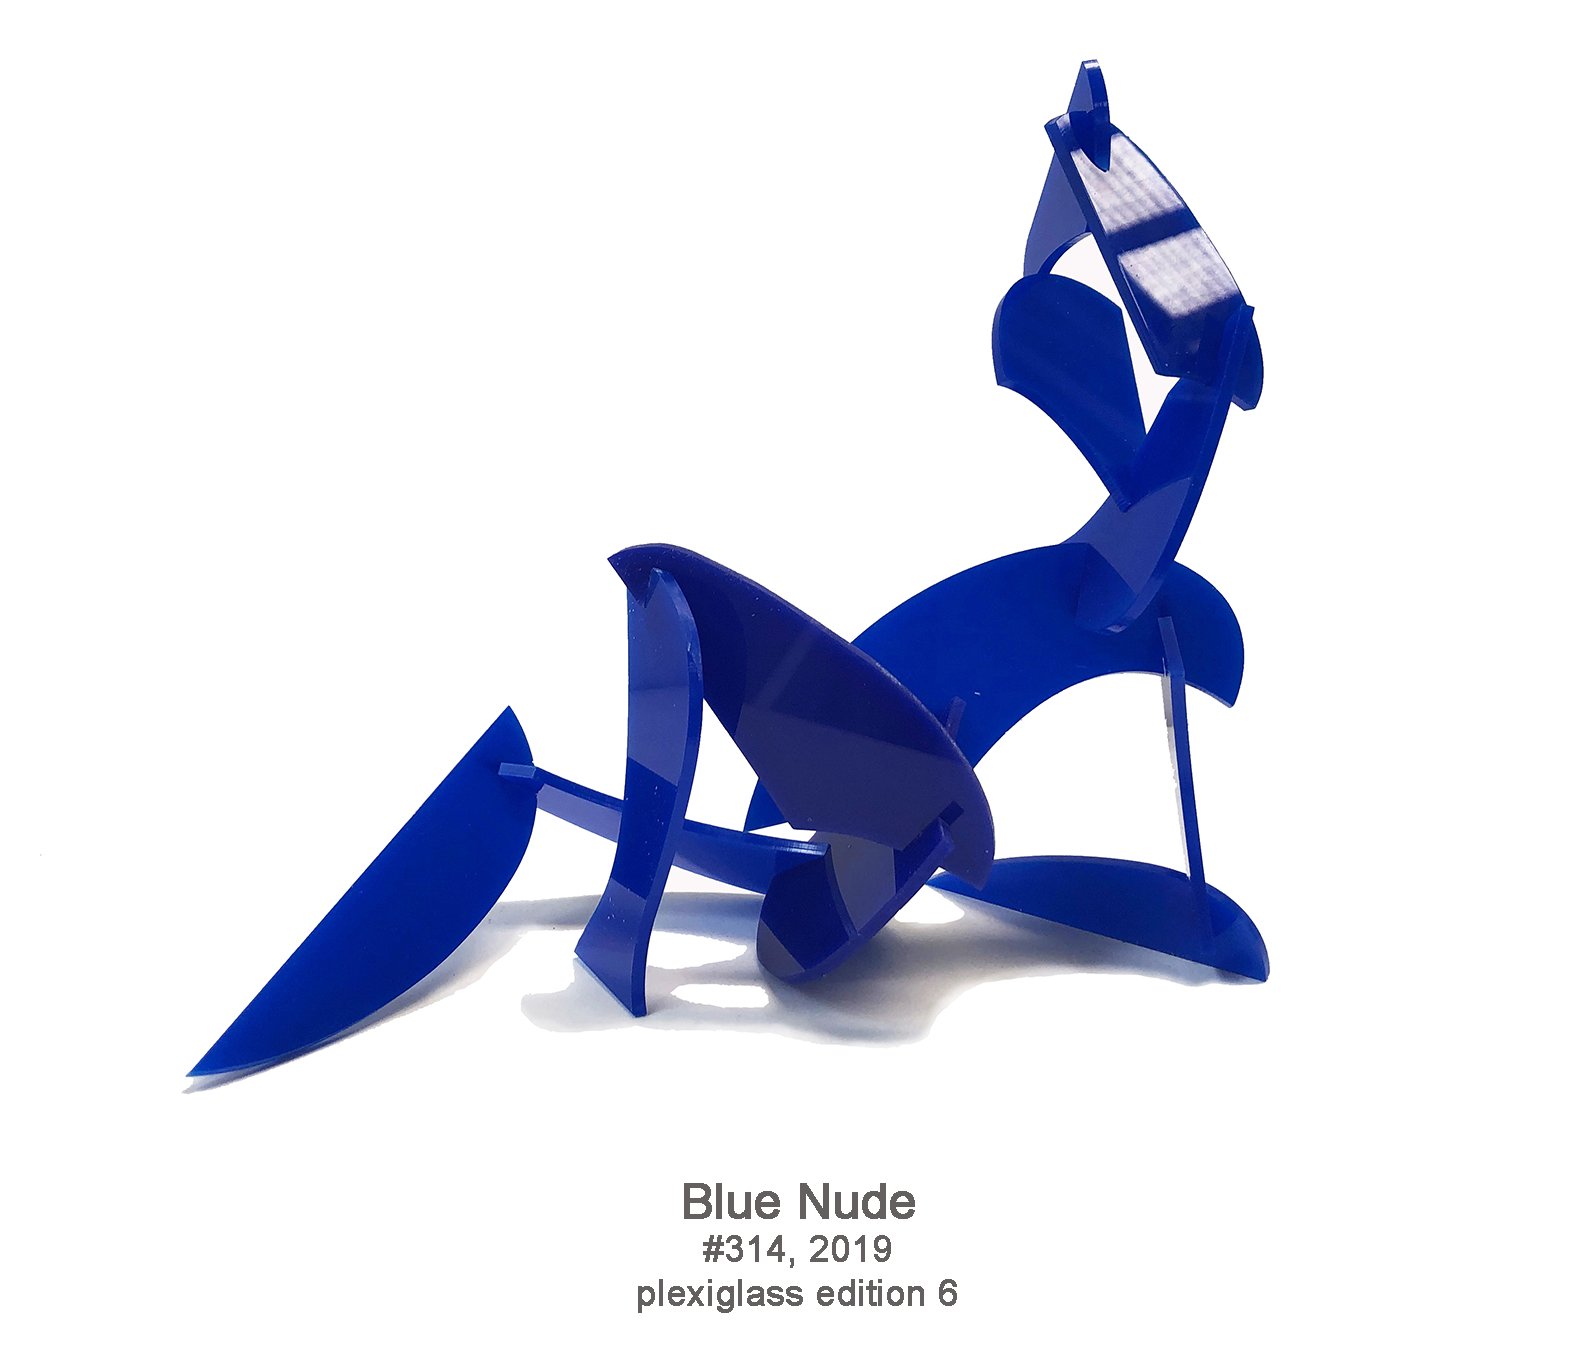 Blue Nude, 2019, Plexiglass, #314